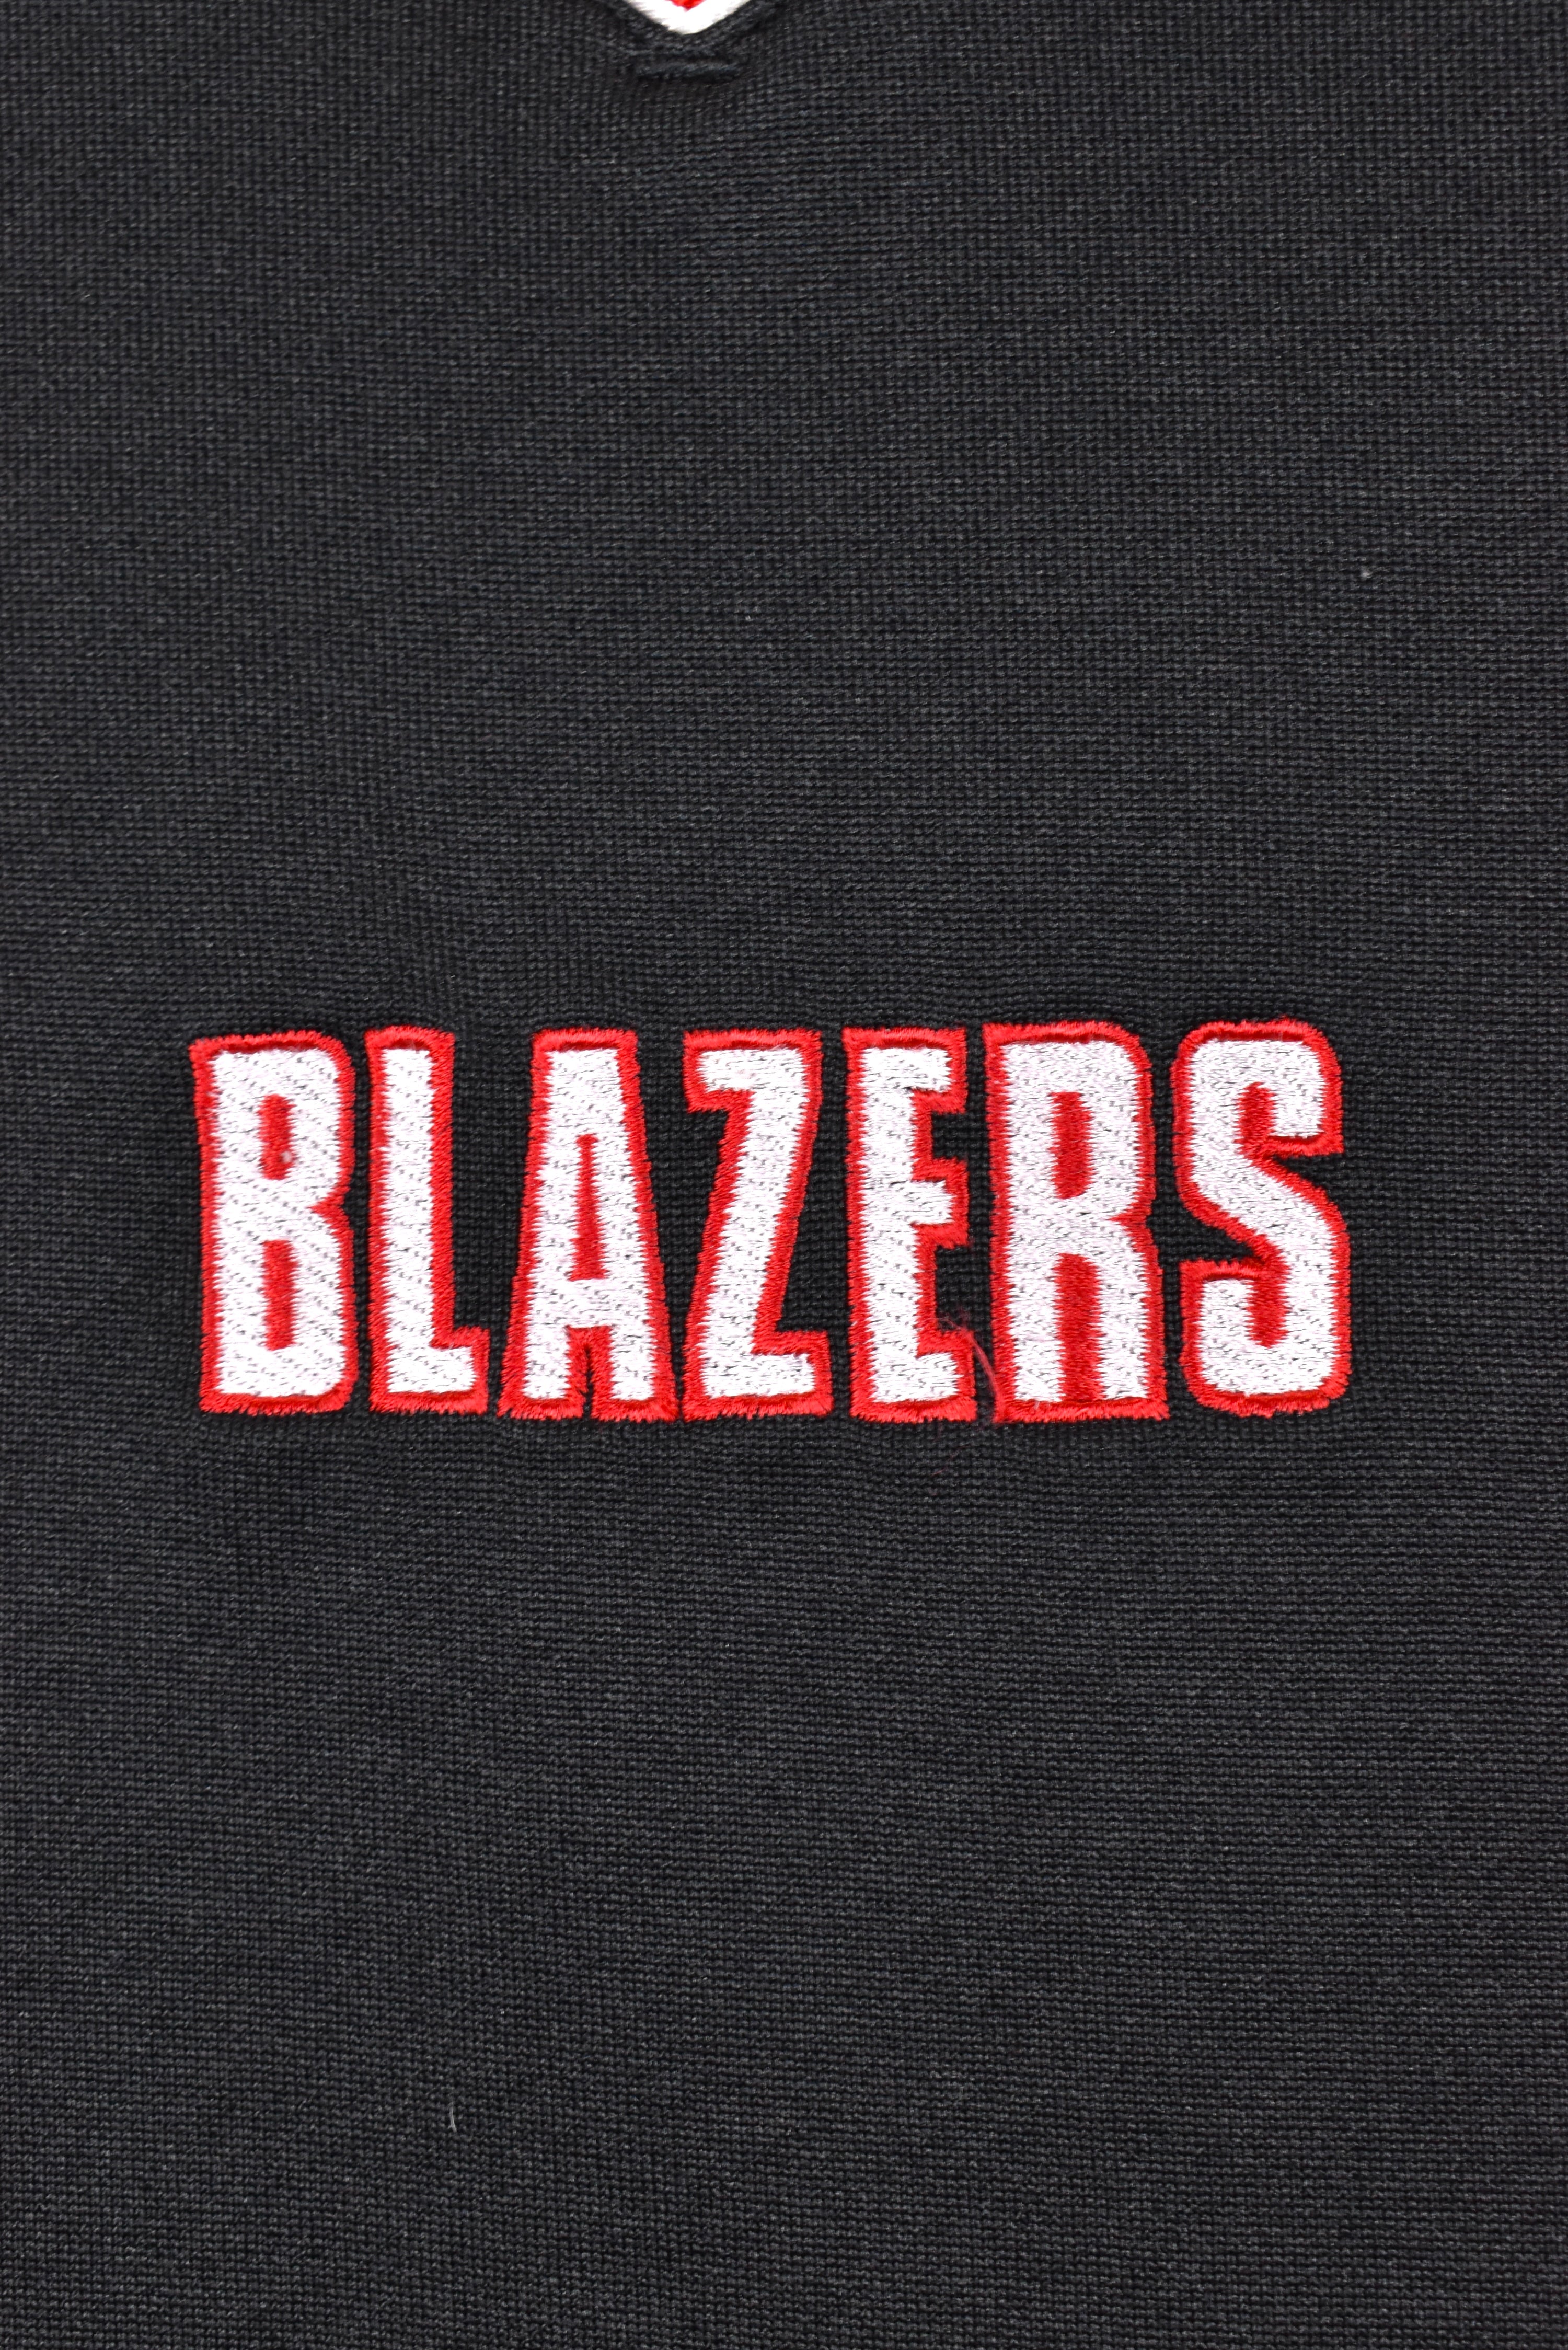 Vintage Portland Trail Blazers sweatshirt, NBA embroidered jersey - AU XXL ADIDAS